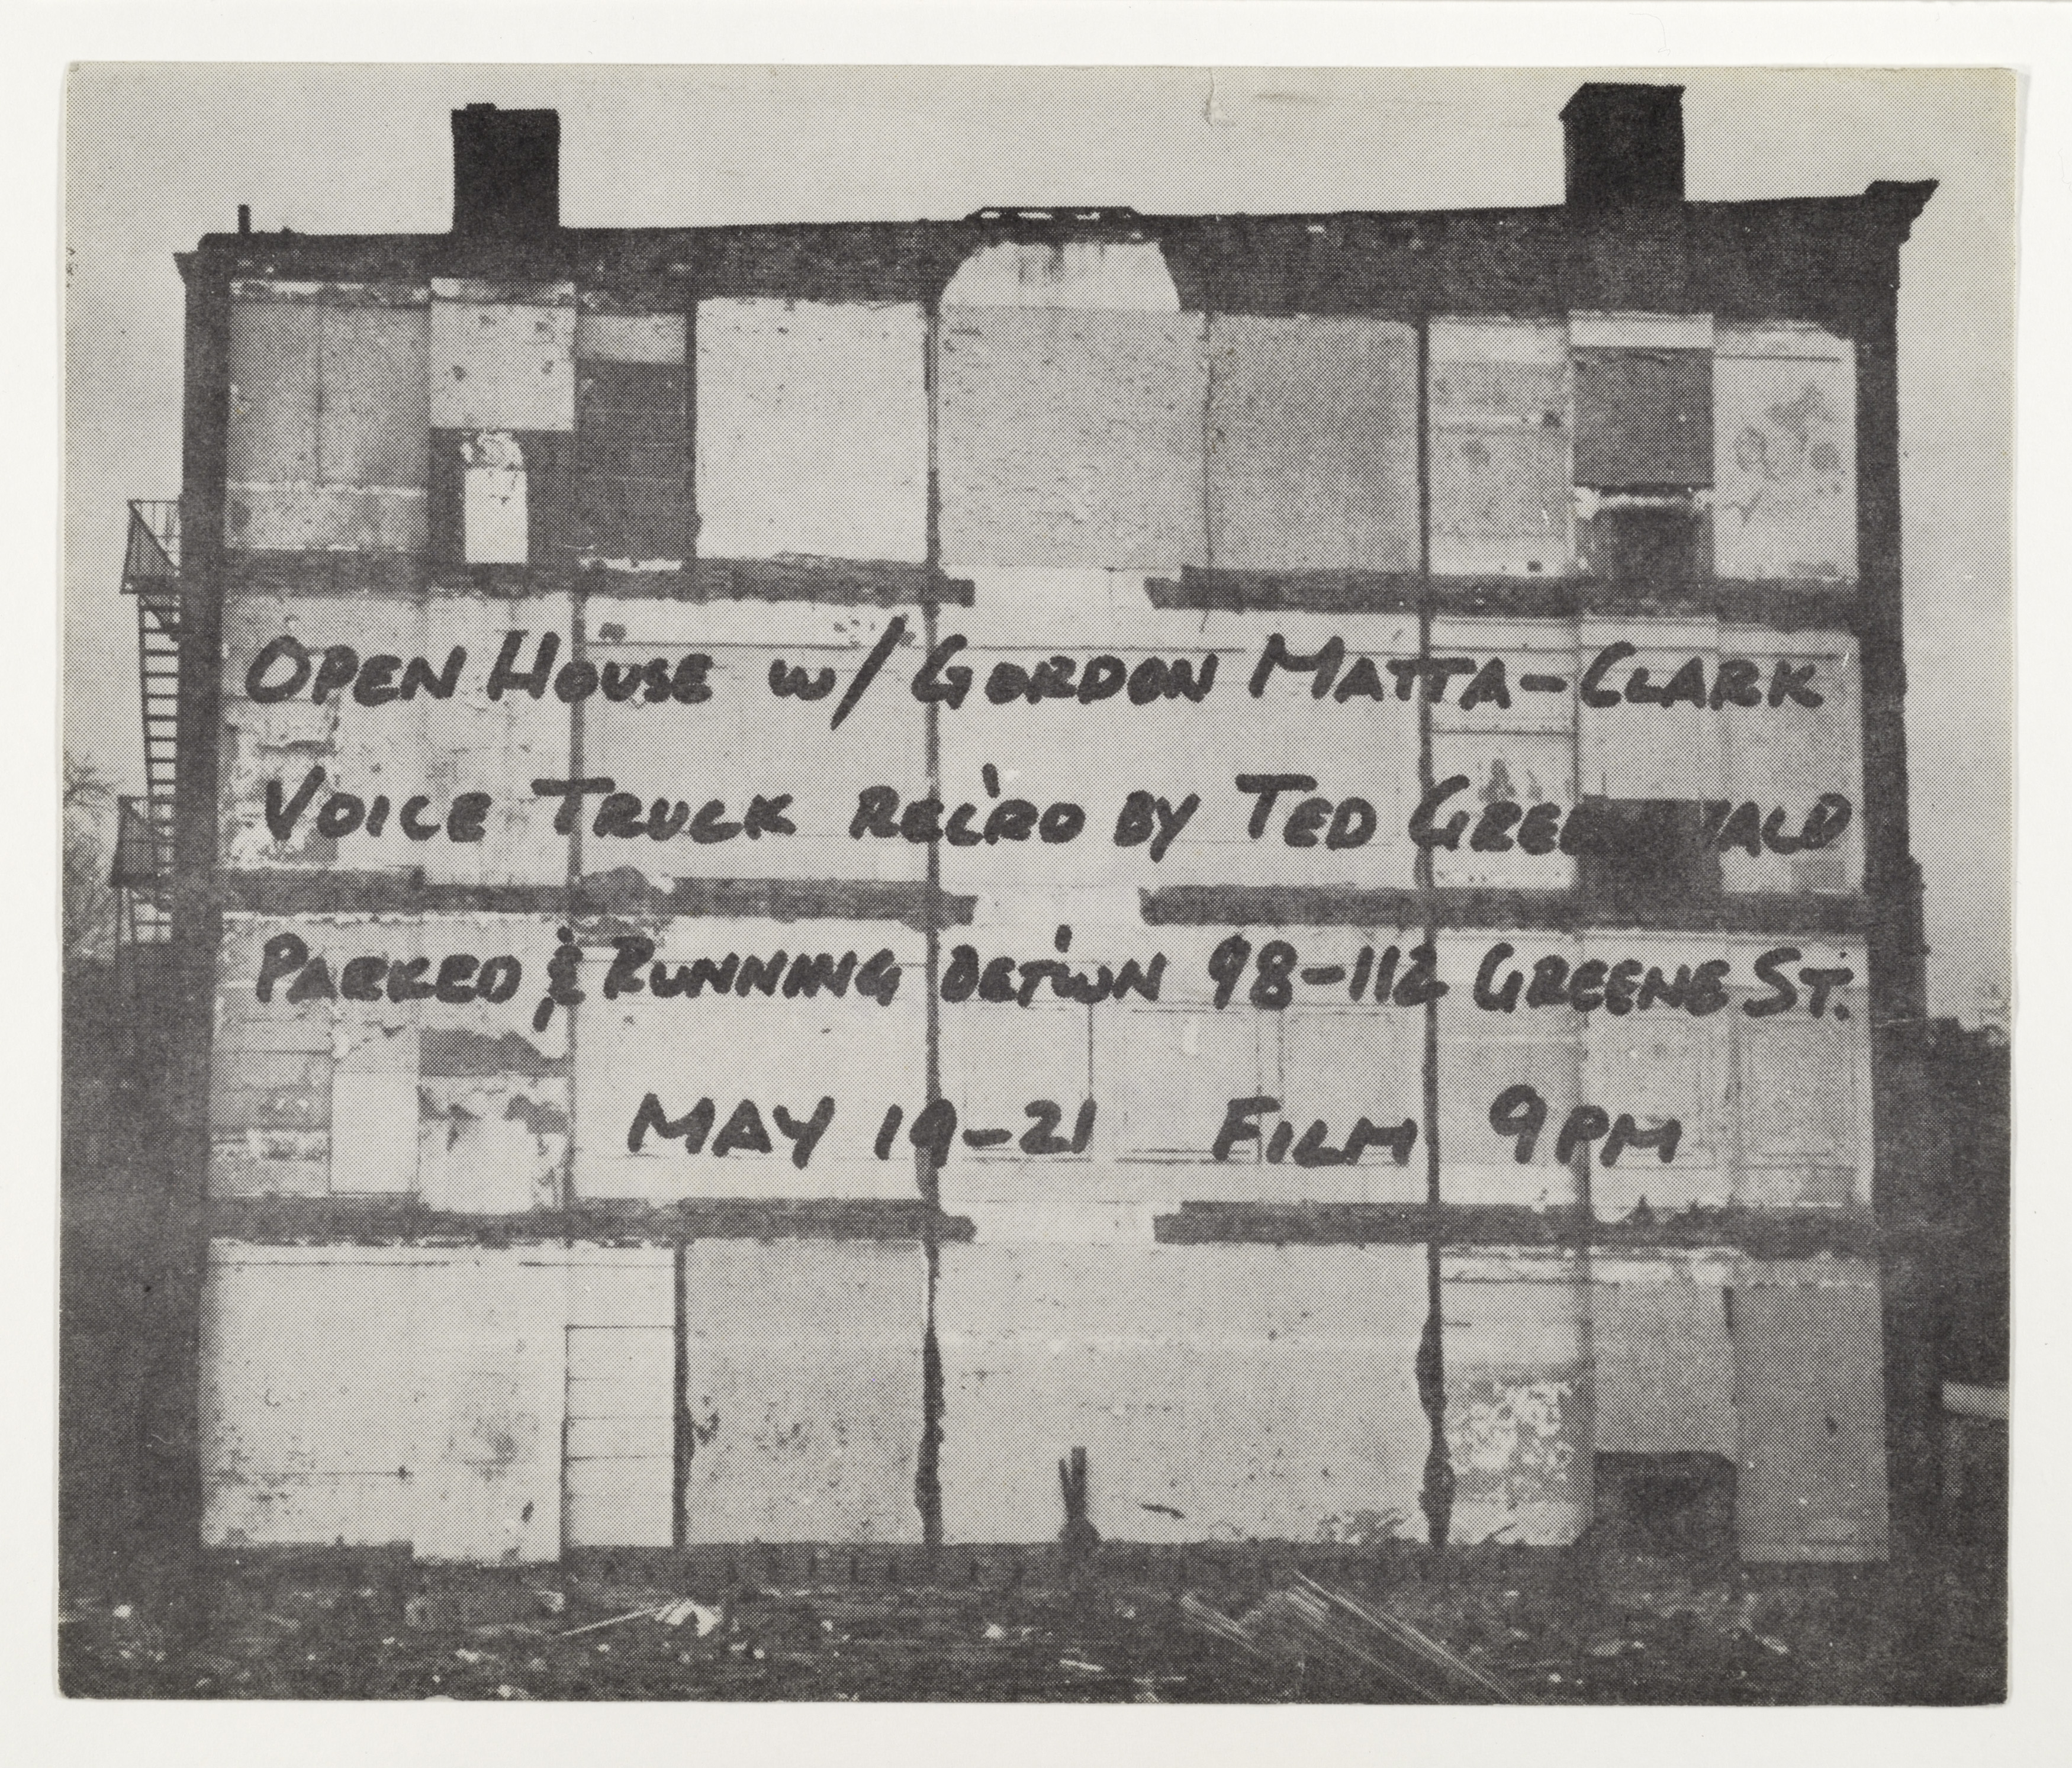 Gordon Matta-Clark, Open House, 112 Greene Street Gallery, New York, 1972; Sammlung Marzona, Kunstbibliothek – Staatliche Museen zu Berlin